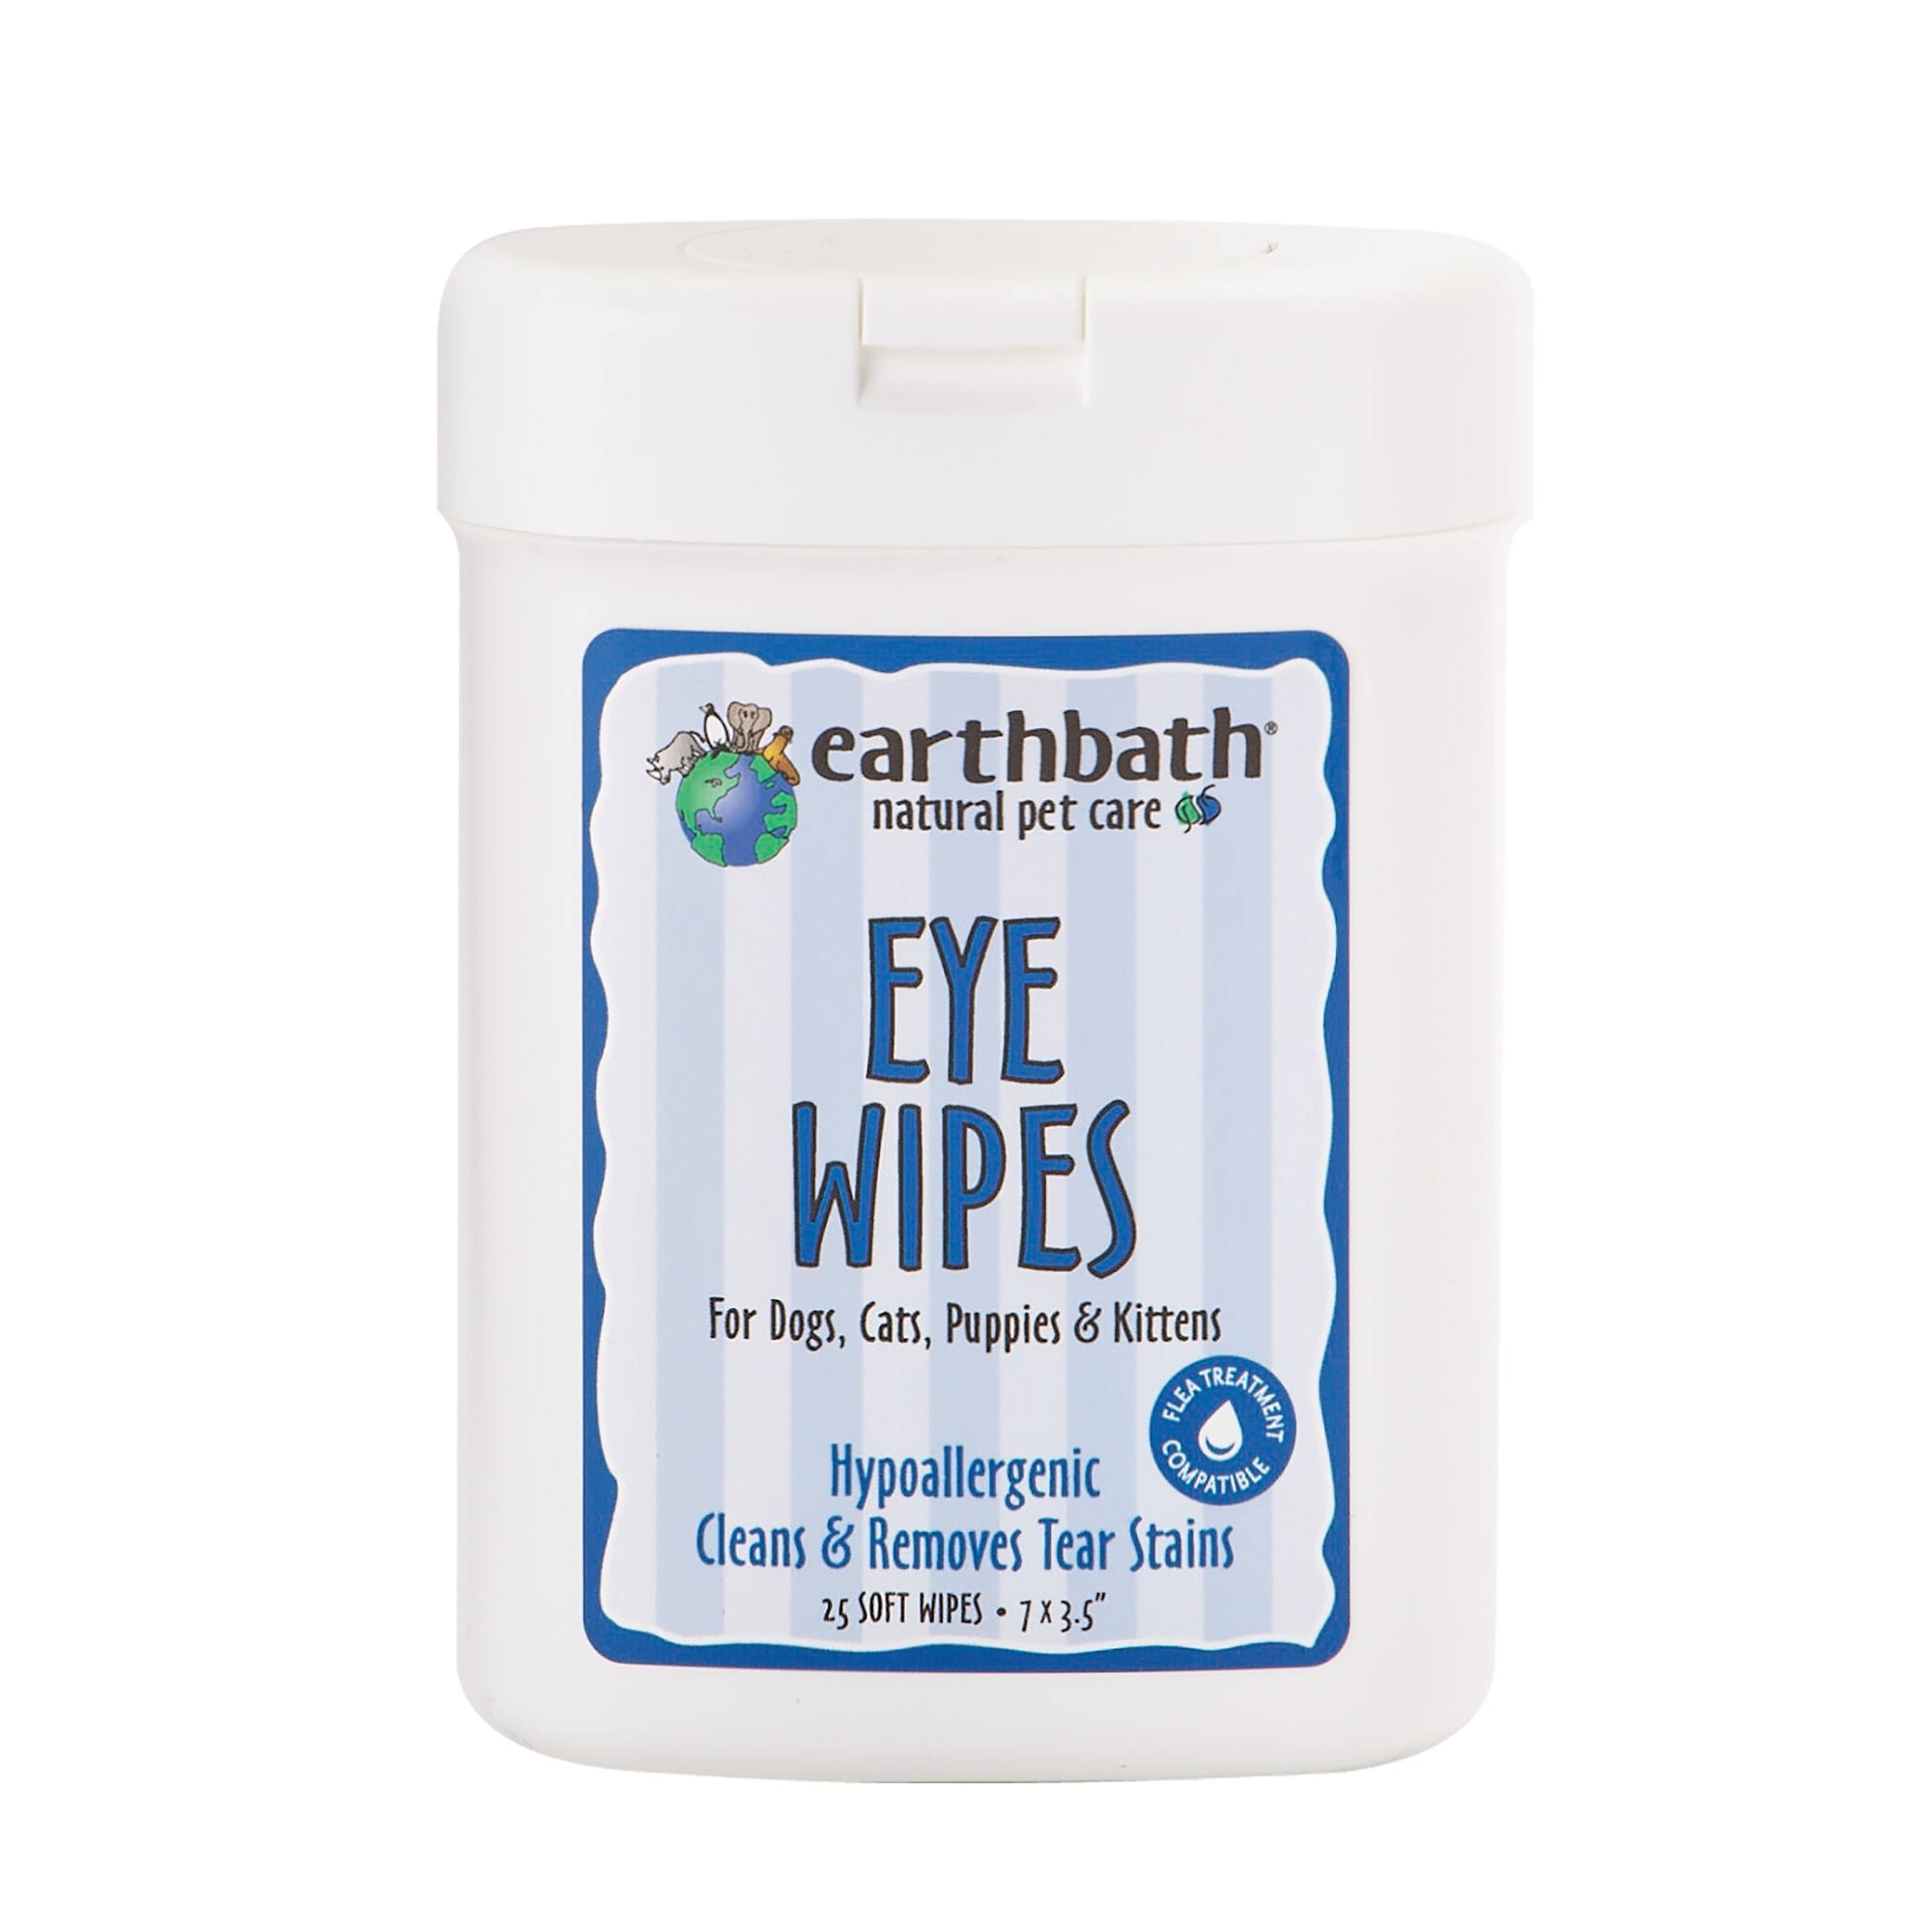 Earthbath Pet Eye Wipes - 25 Soft Wipes